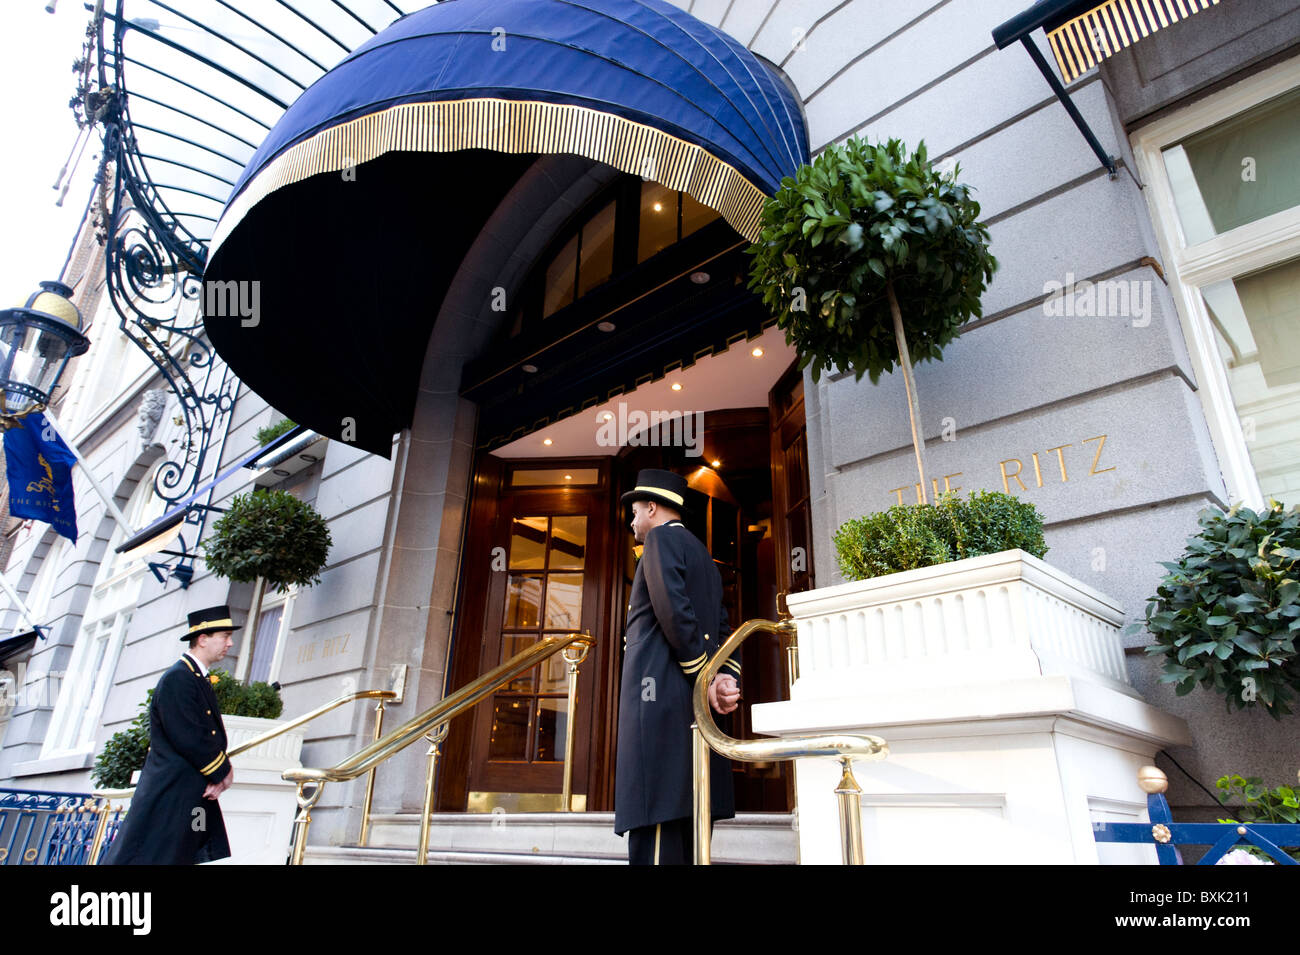 The Ritz Hotel, Piccadilly, London, England, UK Stock Photo